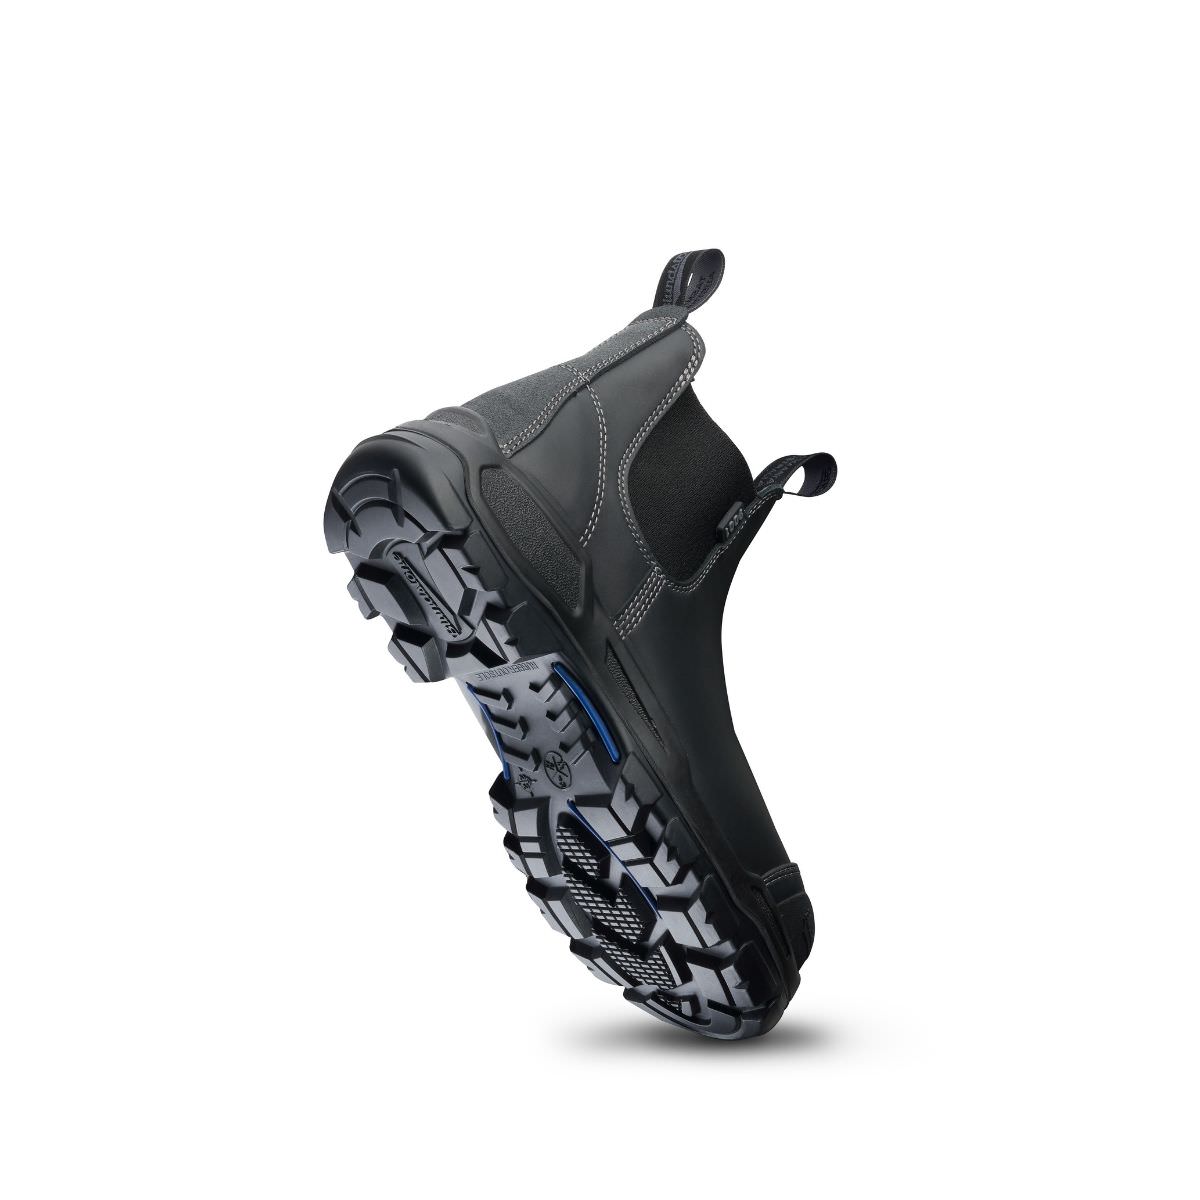 Blundstone Unisex Rotoflex Elastic Side - Slip on Safety Boots - Black #9001